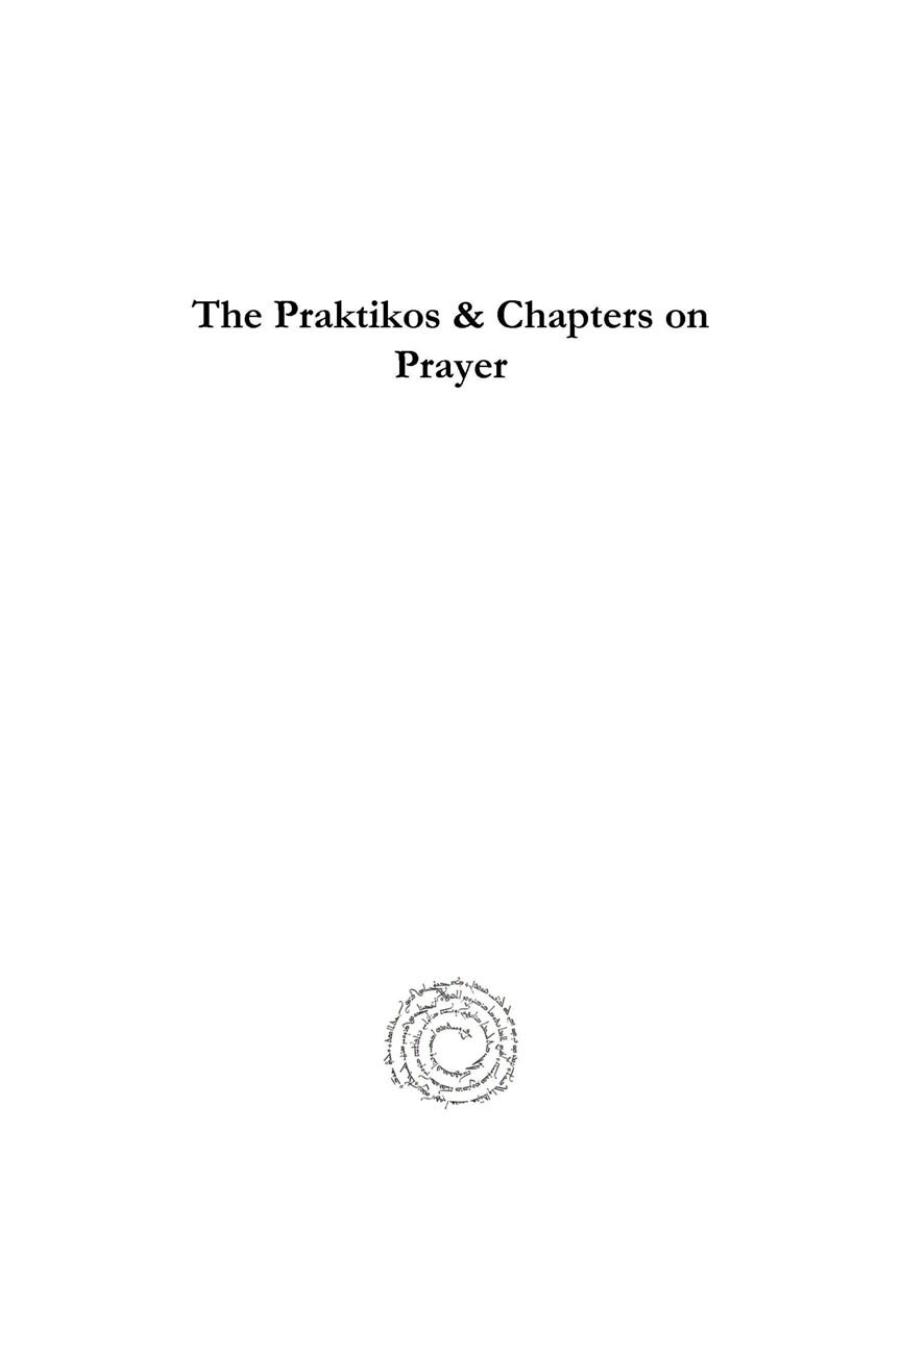 The Praktikos & Chapters on Prayer by Evagrius Ponticus; John Eudes Bamberger